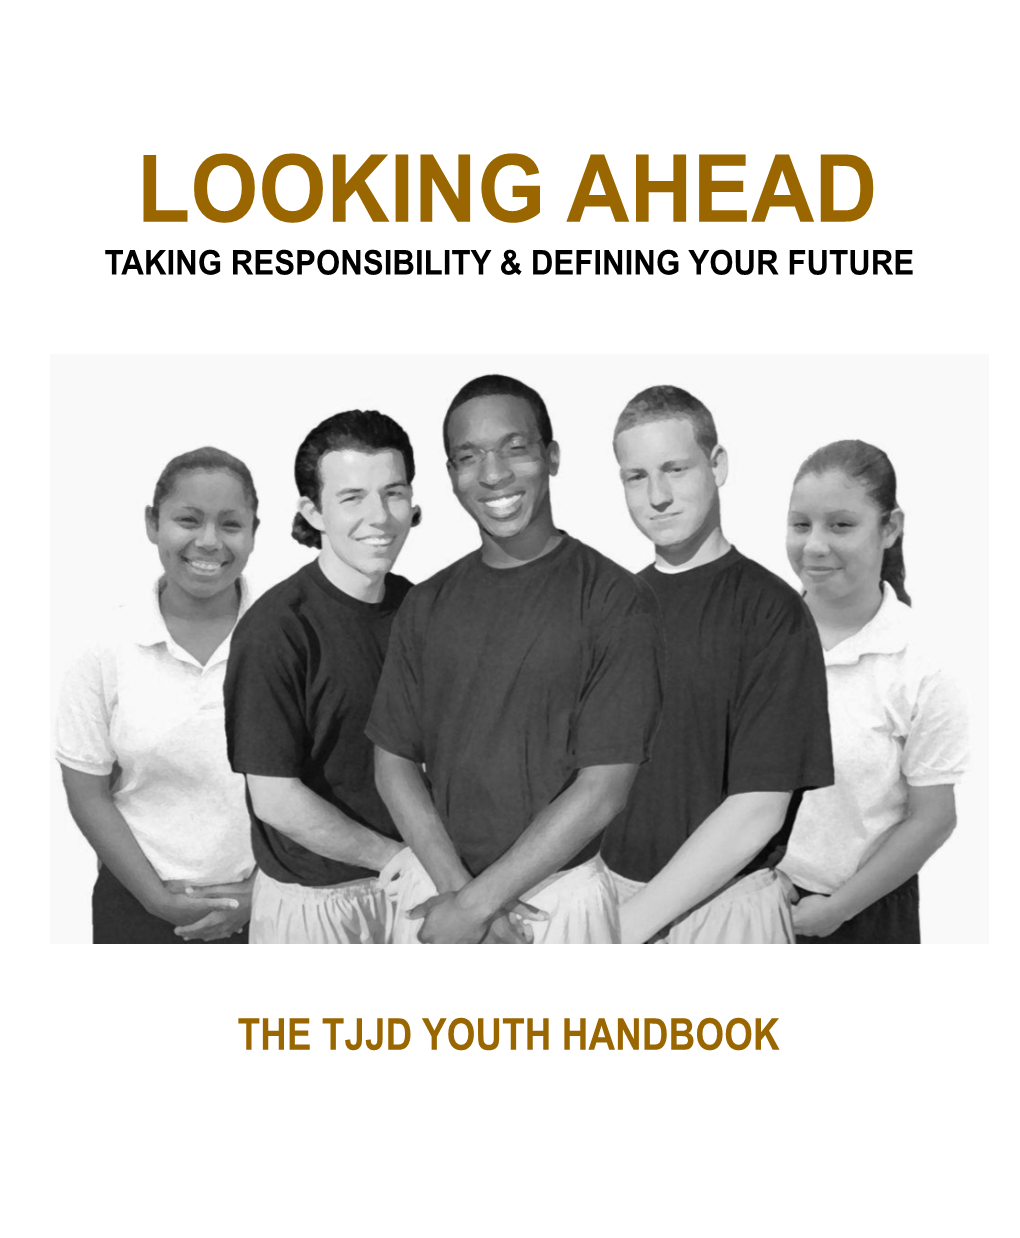 The TJJD Youth Handbook